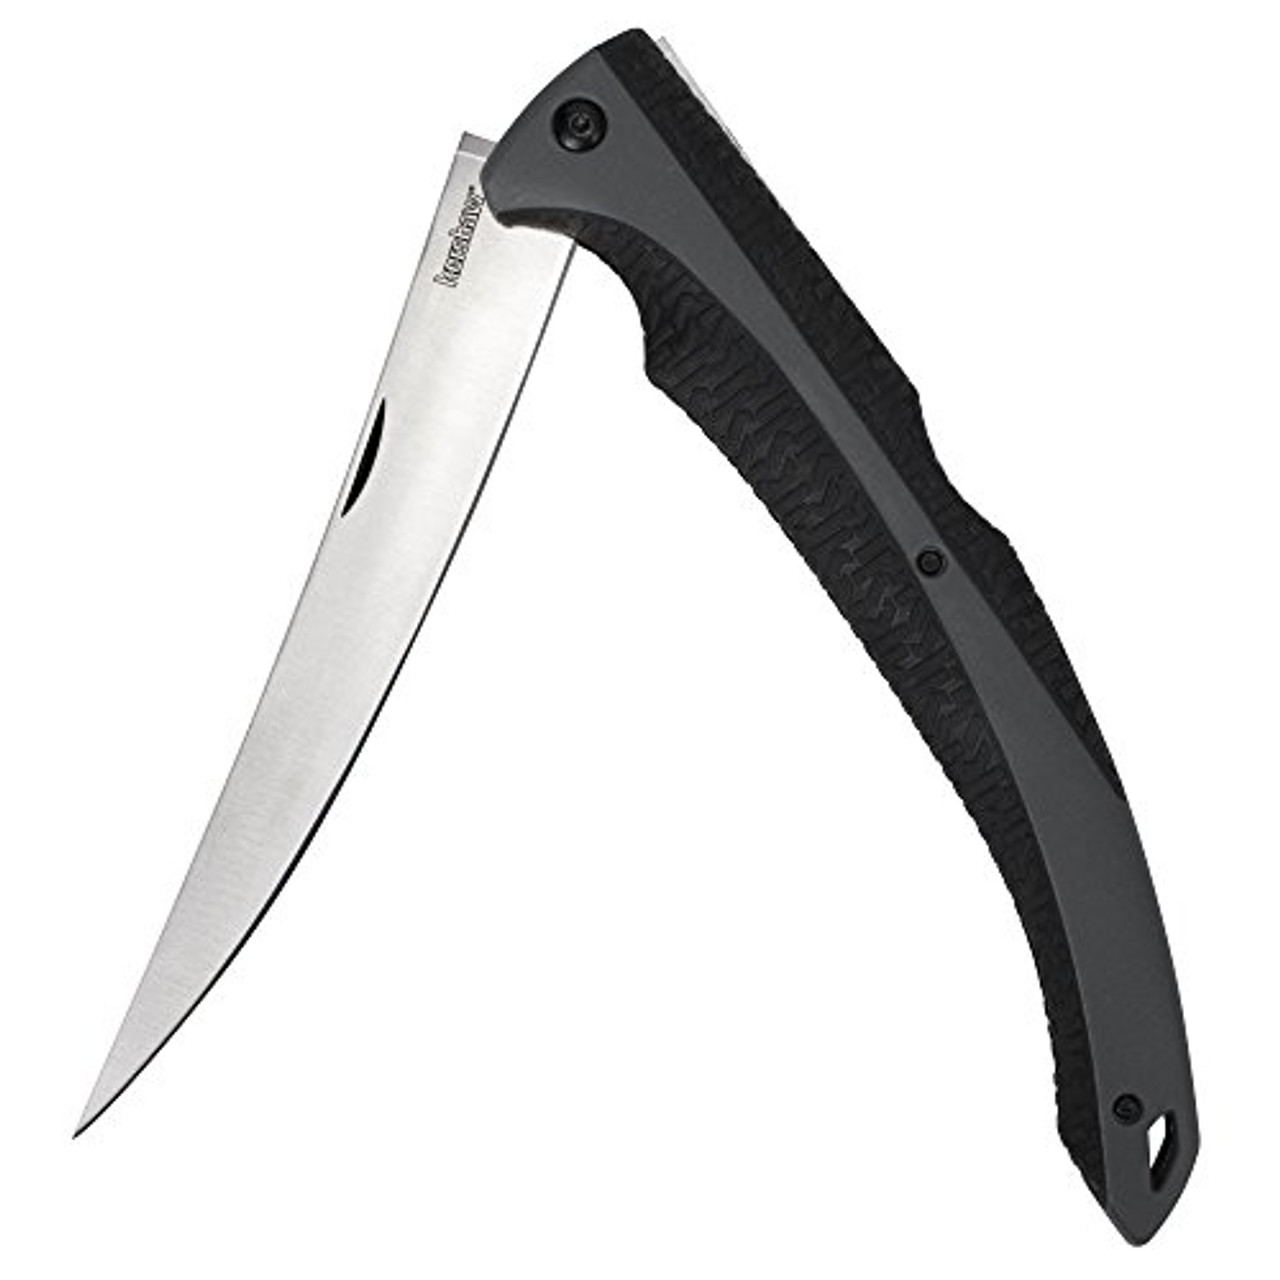 Kershaw 7.5 Narrow Fillet Knife, Satin Bade